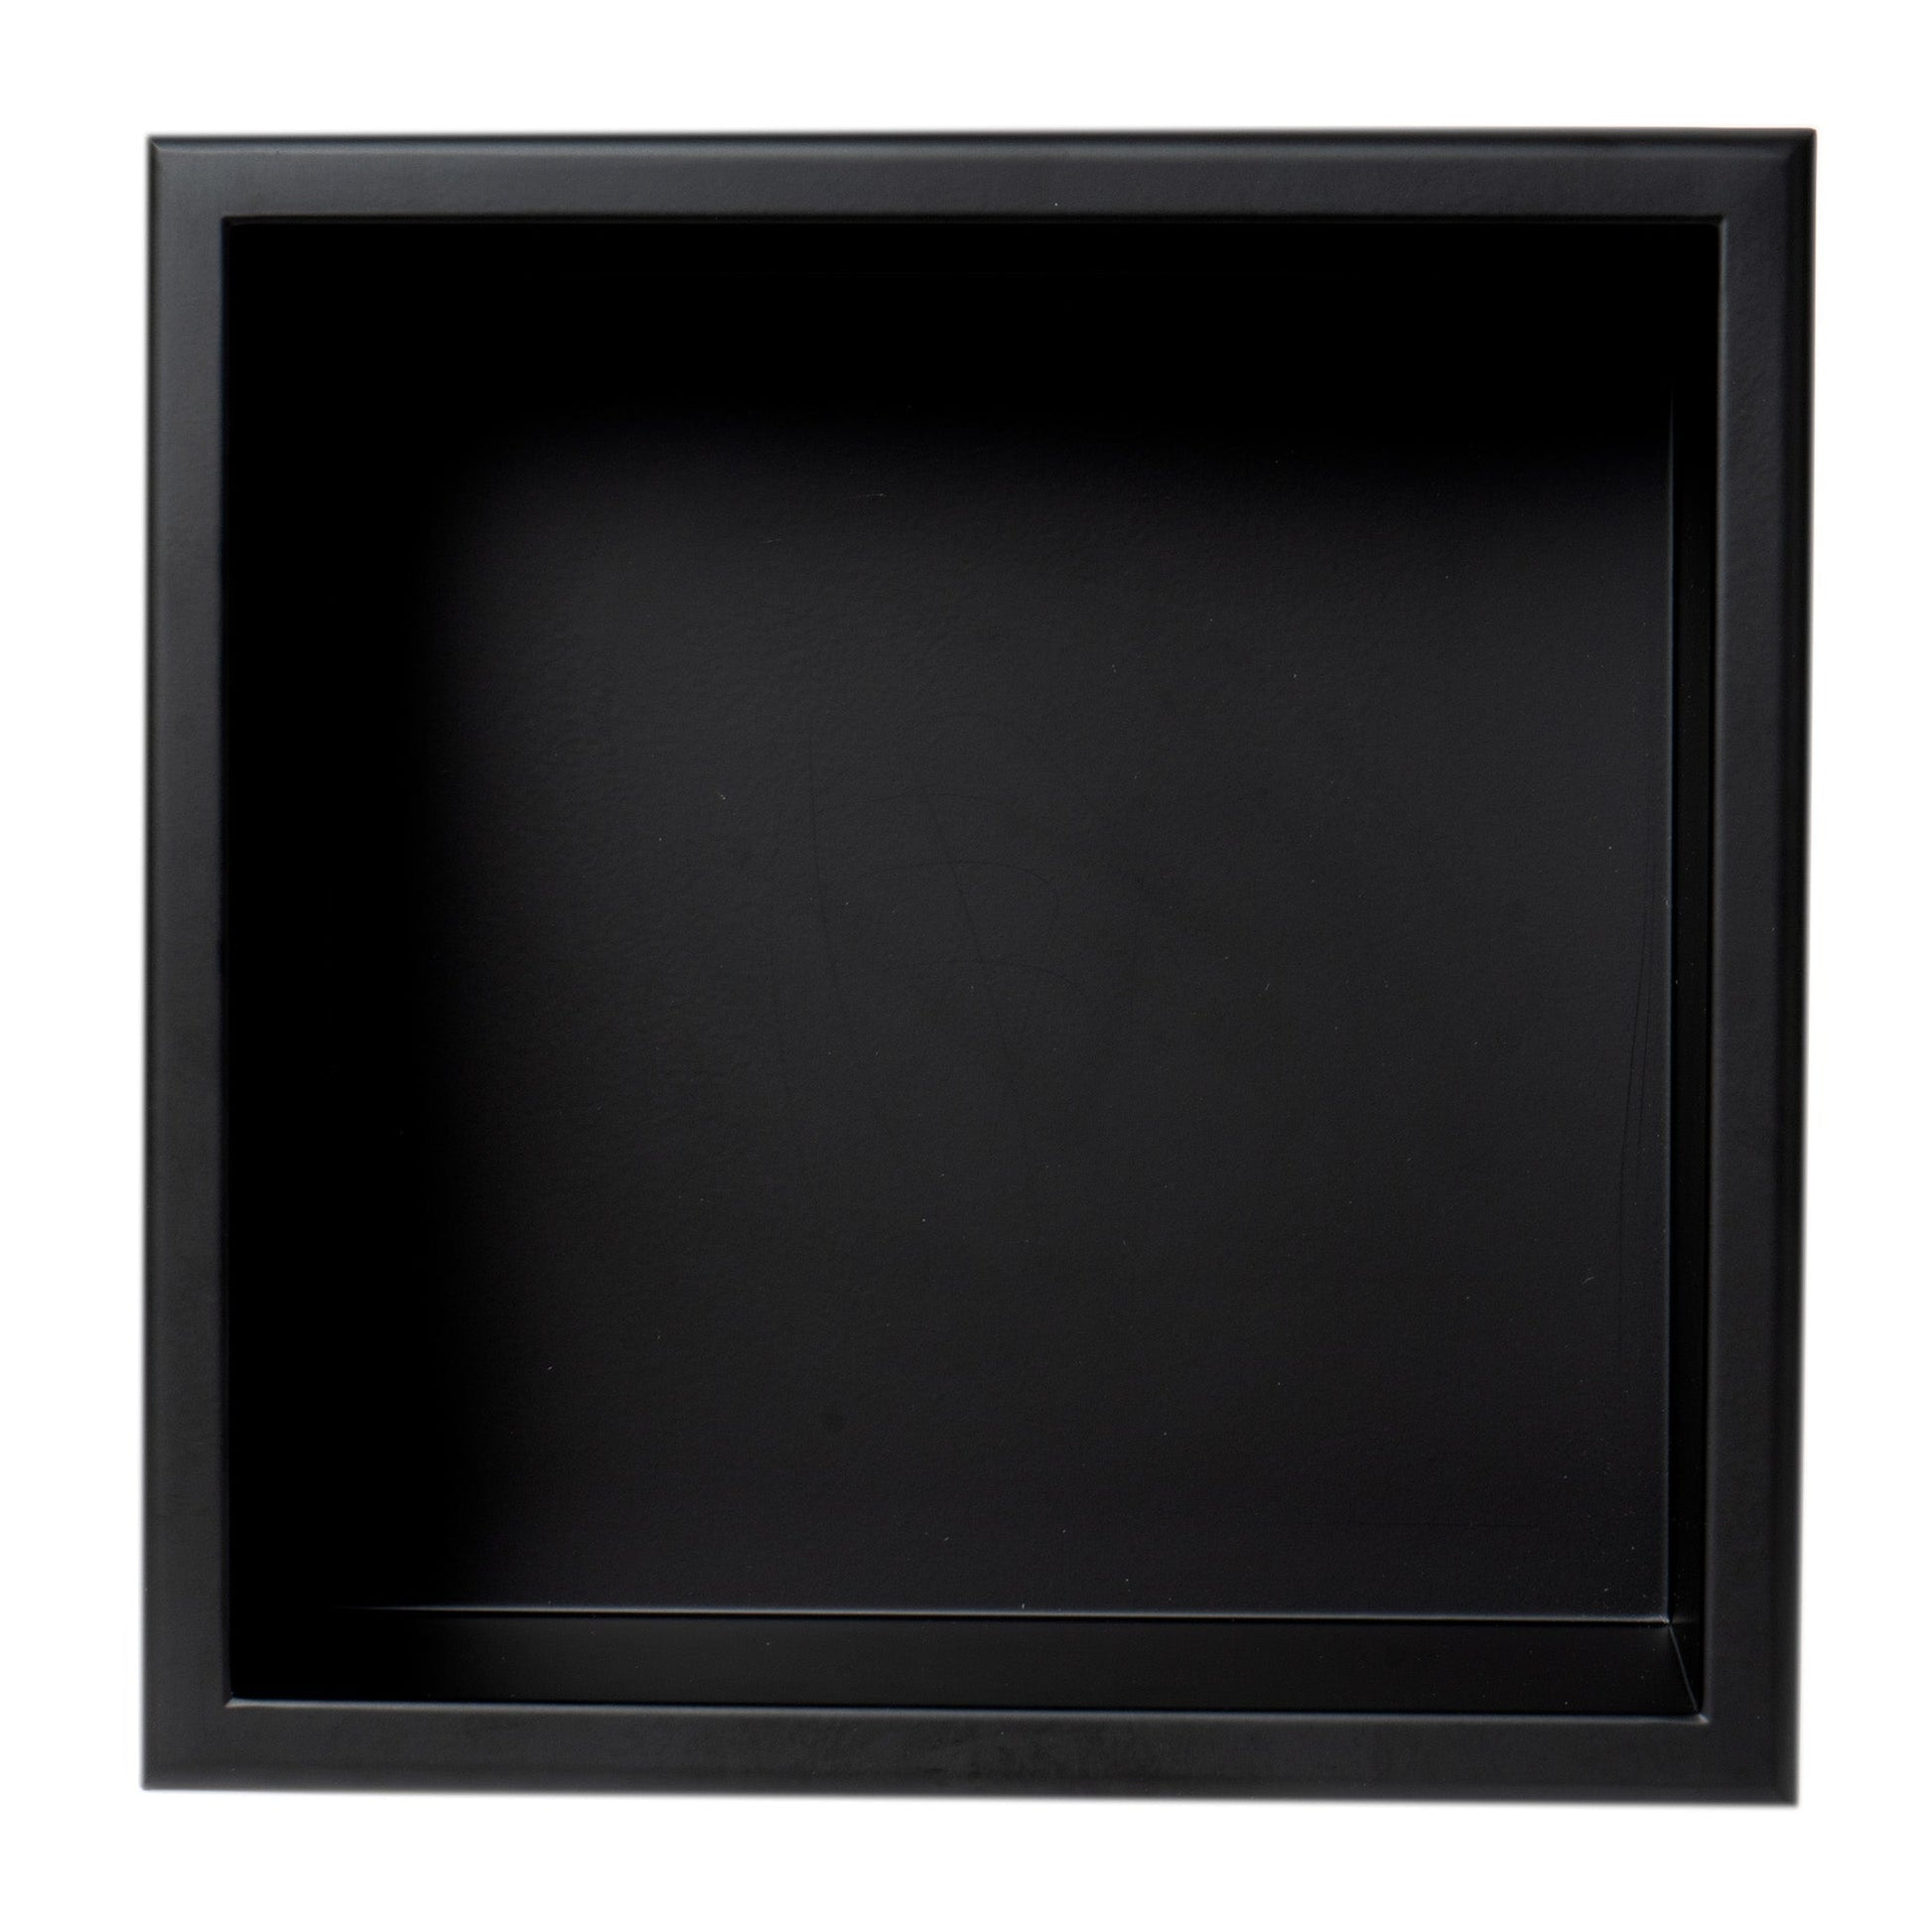 ALFI Brand ABNC1212-BLA 12" Black Matte Stainless Steel Square Single Shelf Bath Shower Niche